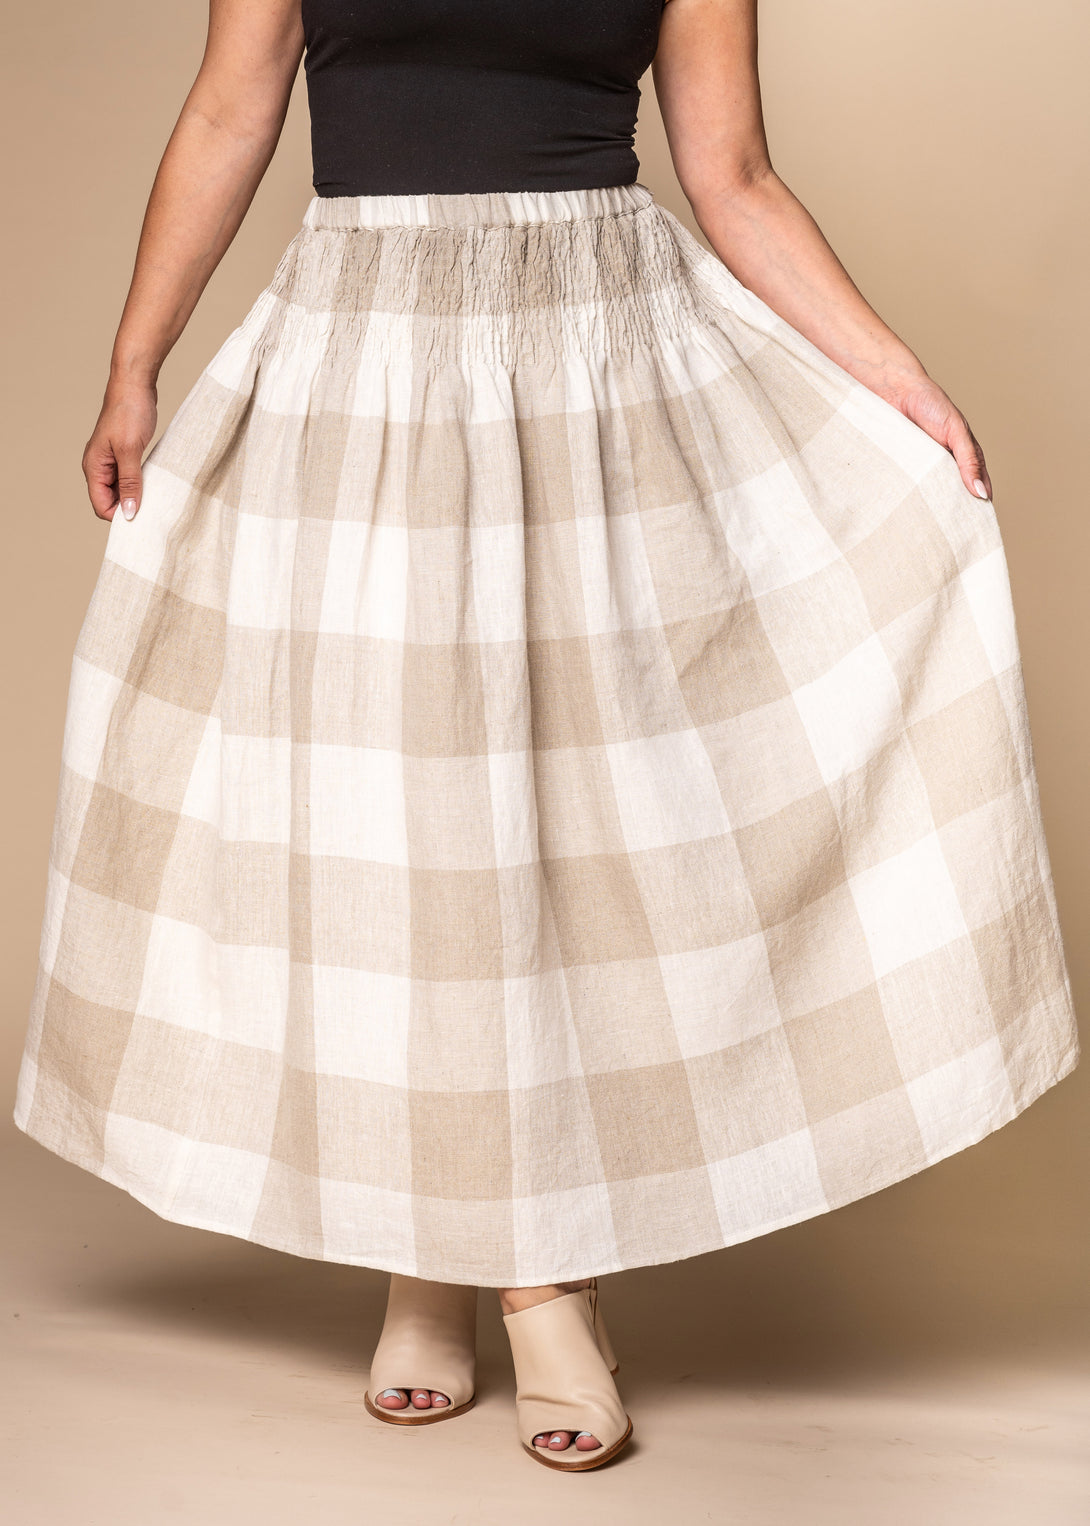 Jagoda Linen Skirt in White - Imagine Fashion